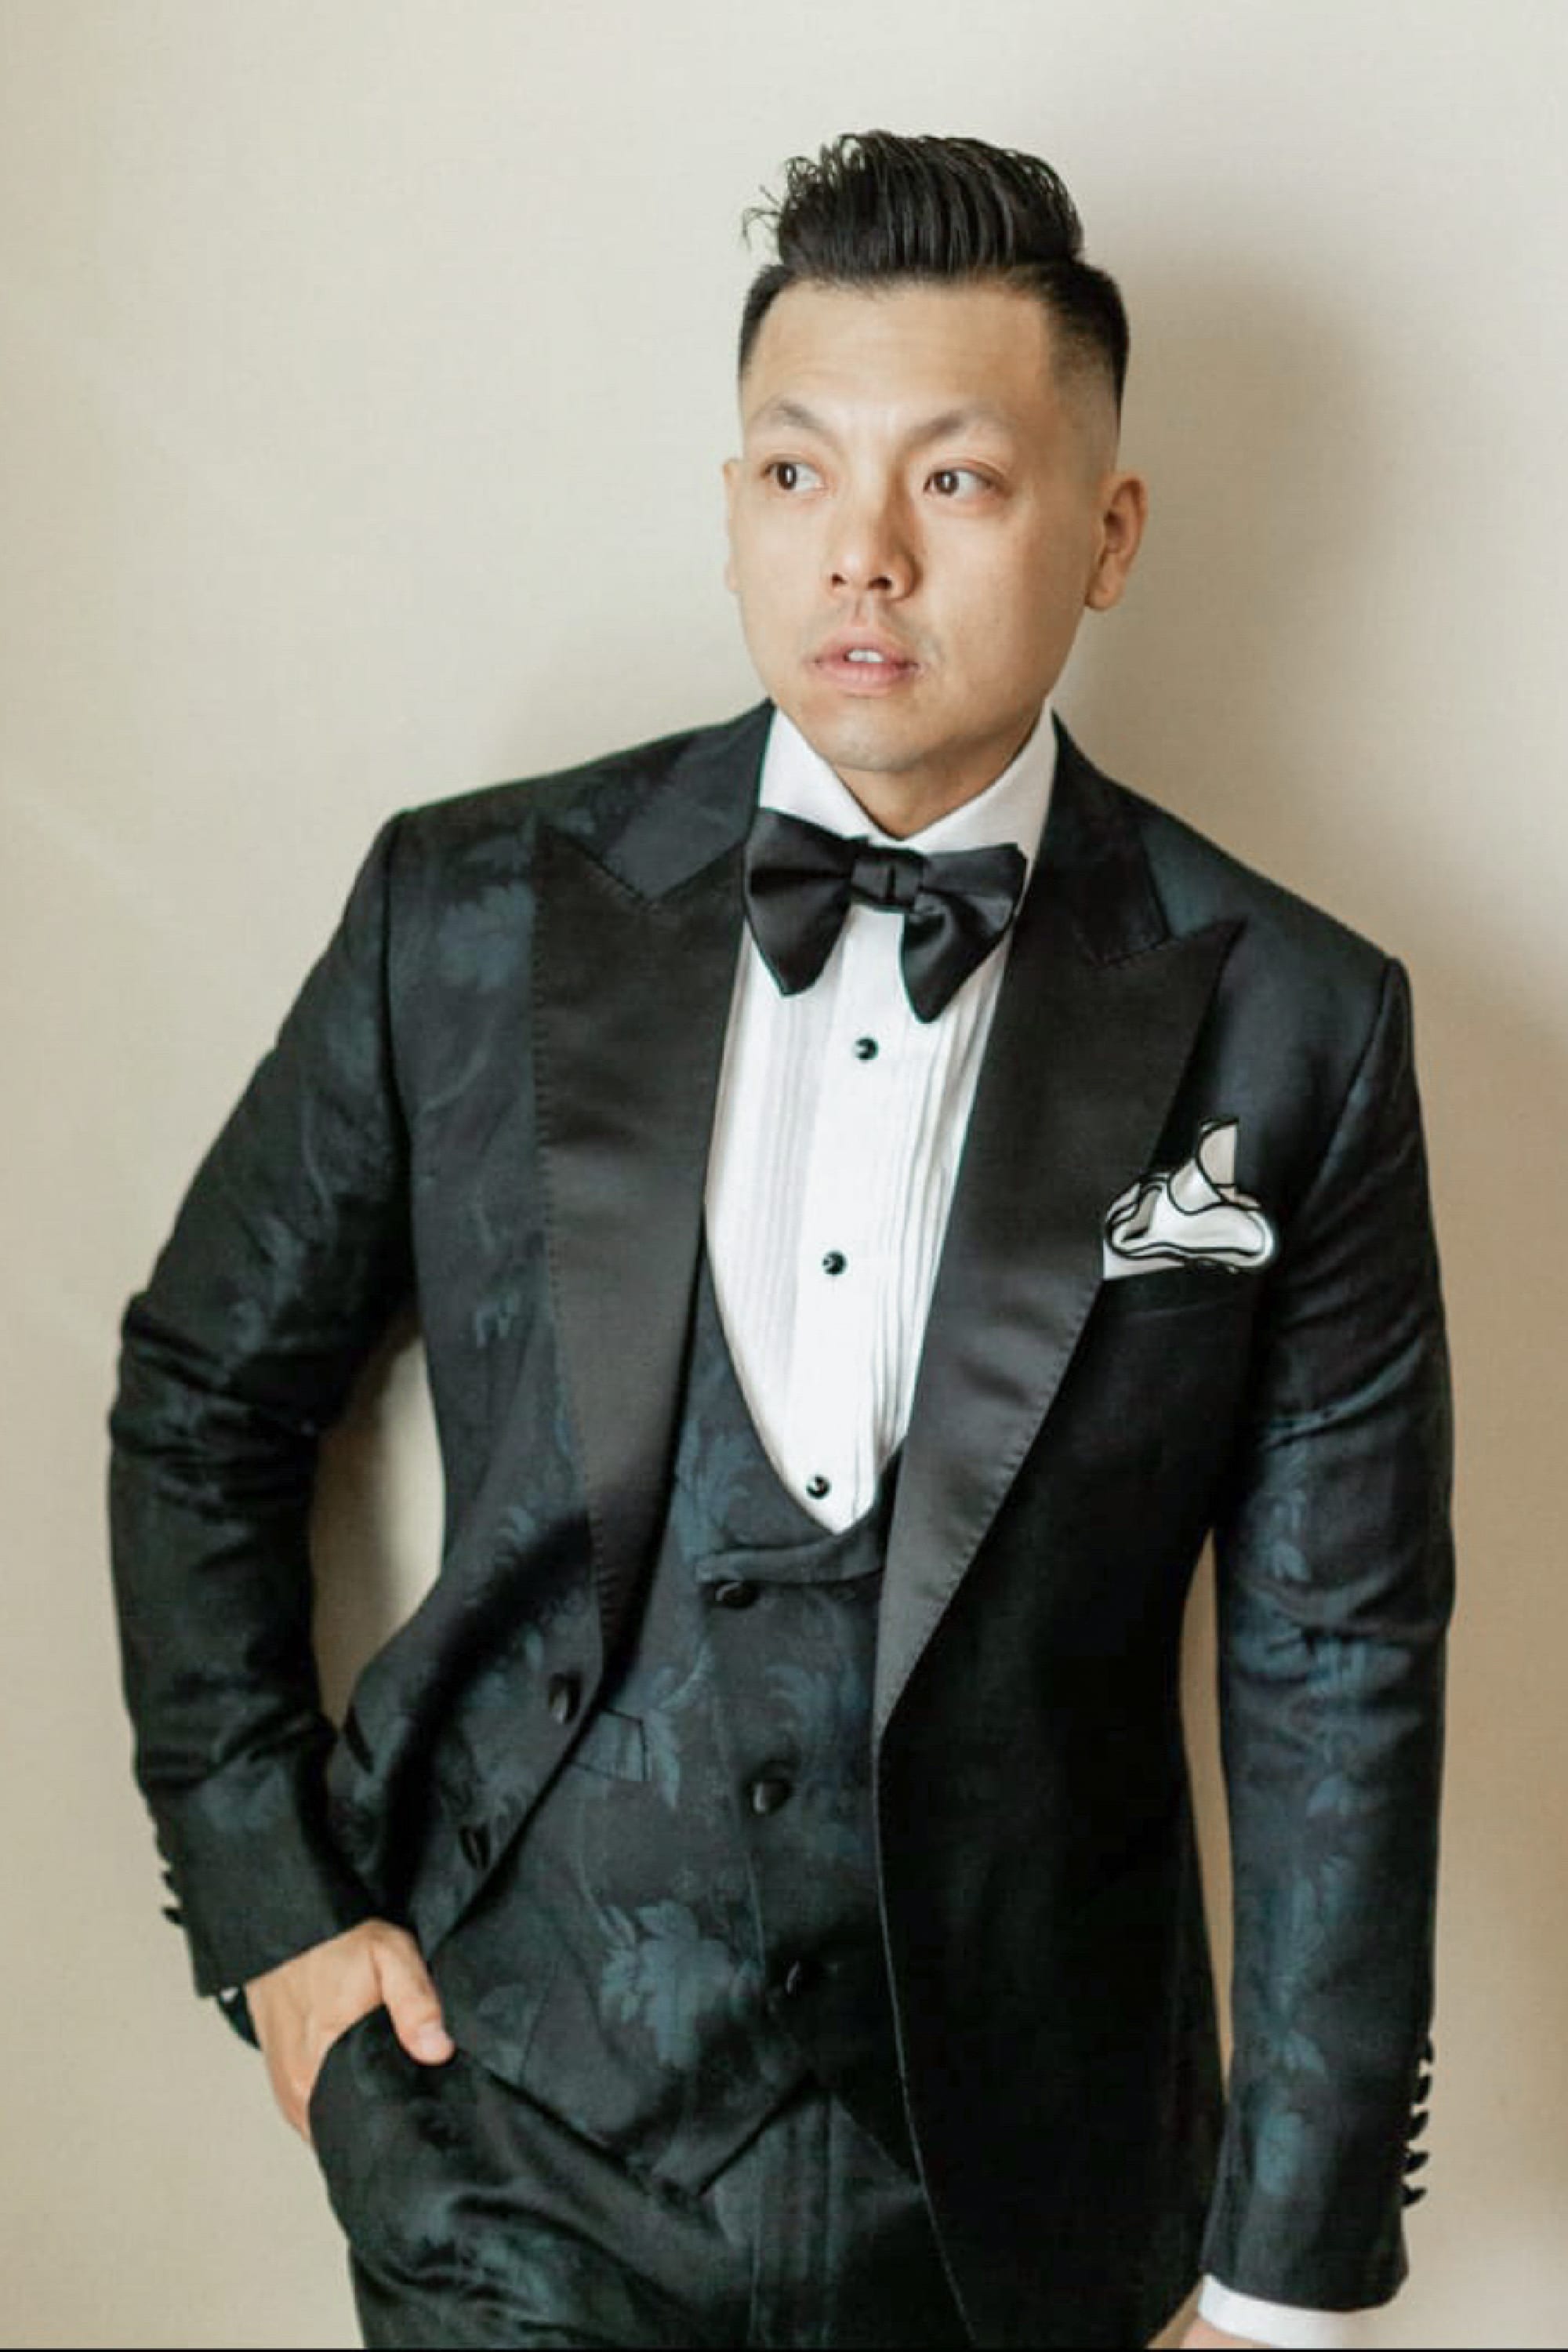 Steve Lam from Calgery Wears a Wedding Suit by King & Bay